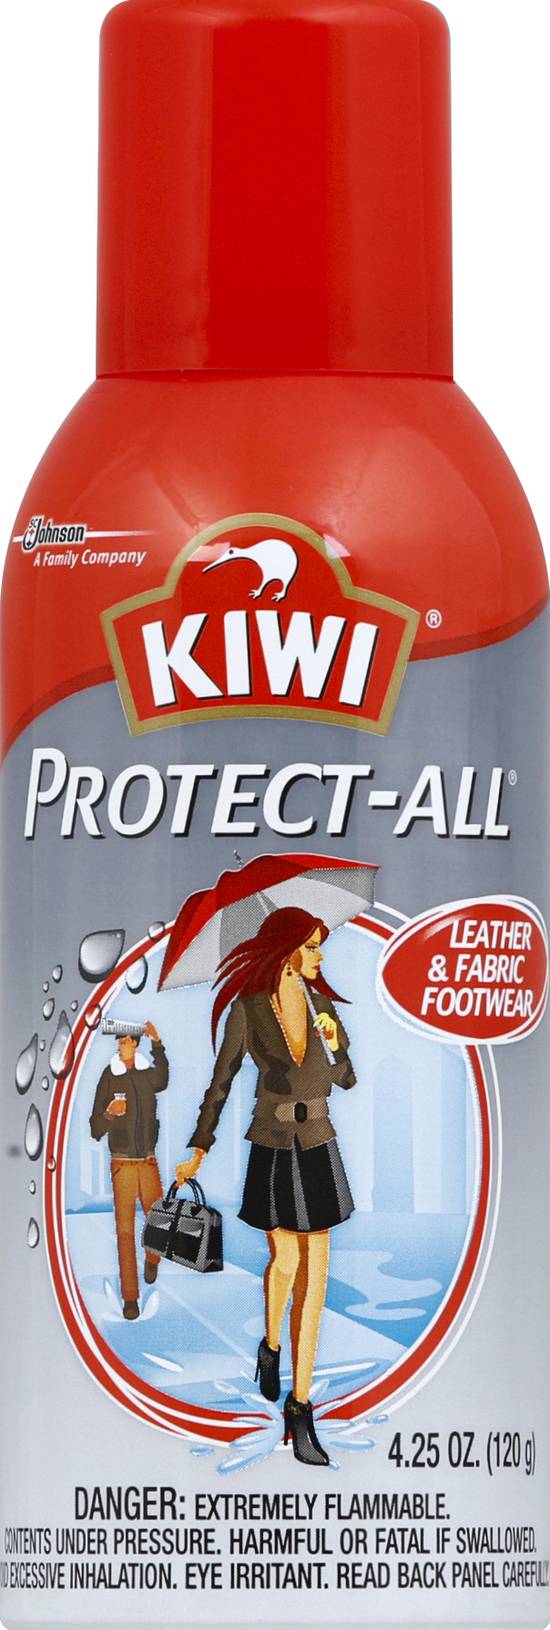 Kiwi Protect-All Leather & Fabric Footwear